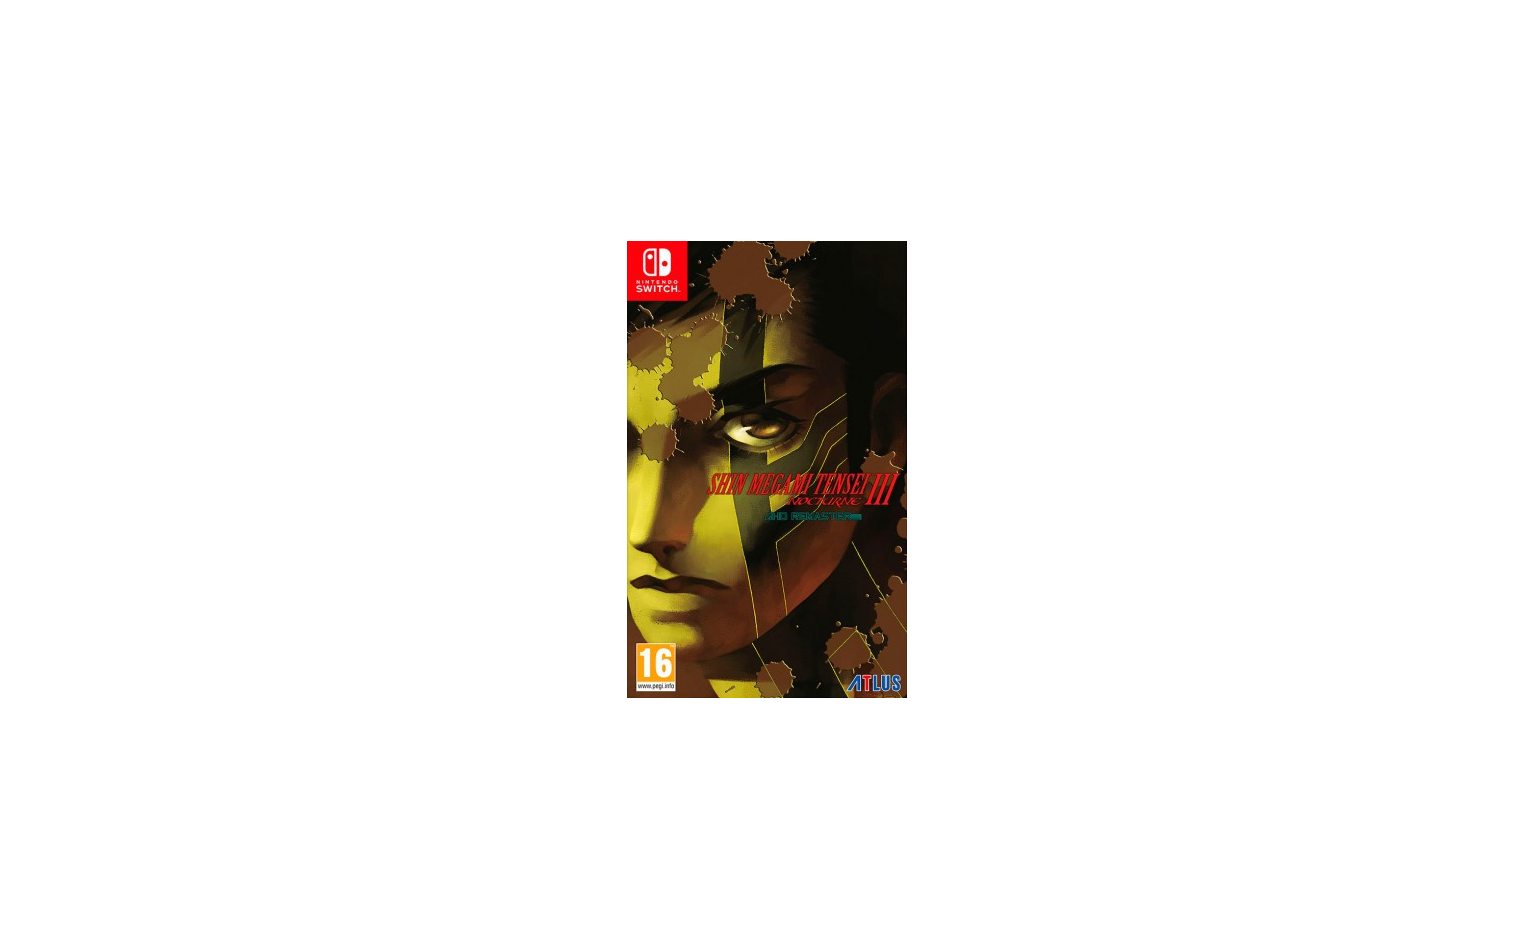 Nintendo Shin Megami Tensei III Nocturne HD Remaster. Код загрузки, без картриджа Nintendo